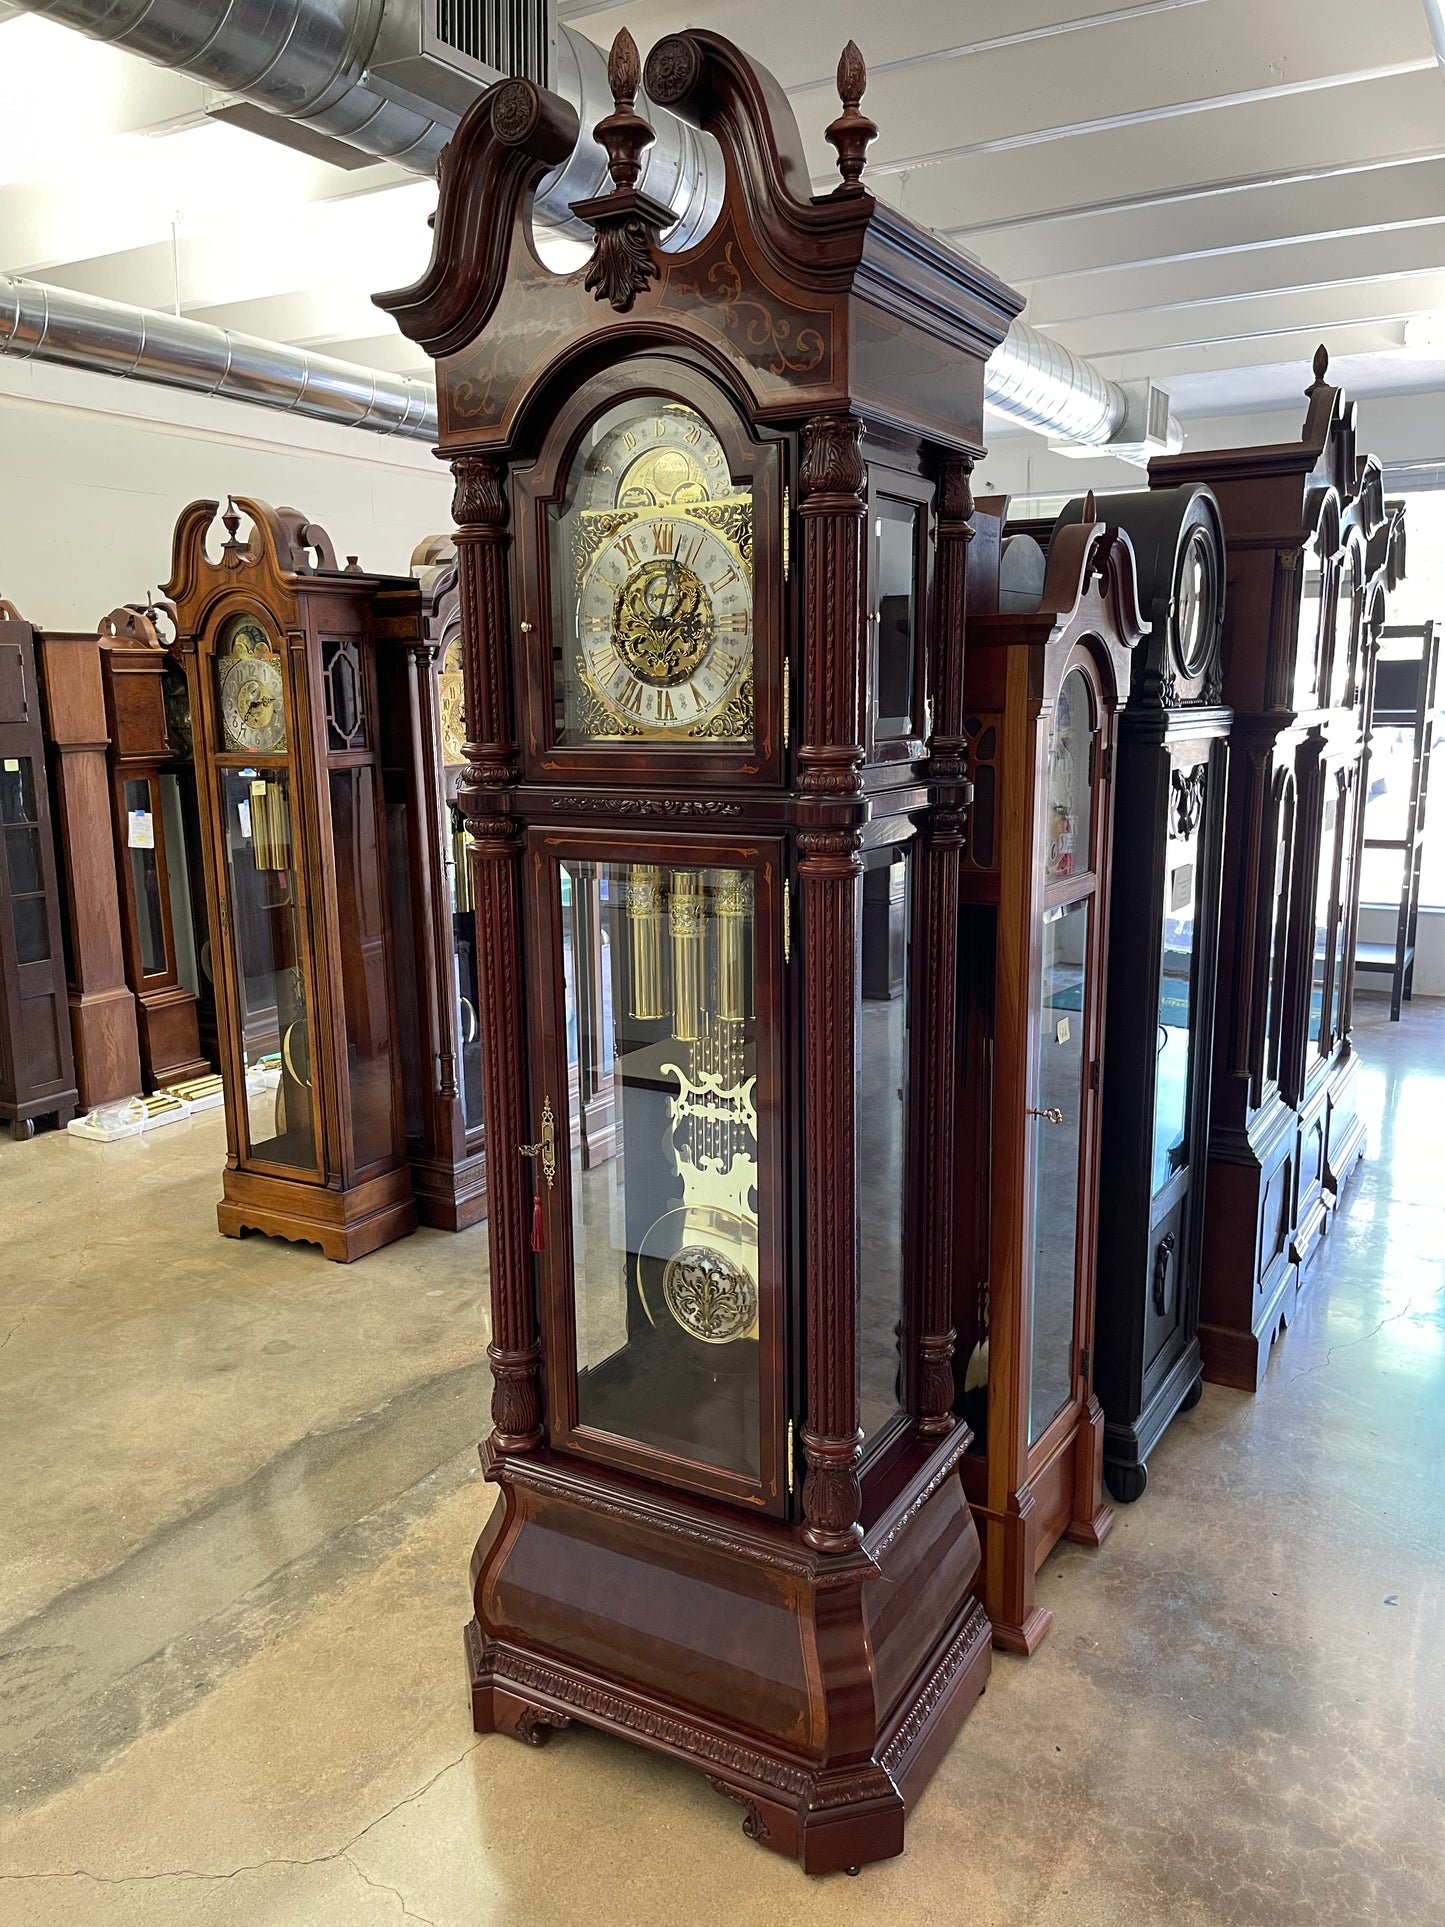 Howard Miller J.H. Miller 611-030 Grandfather Clock